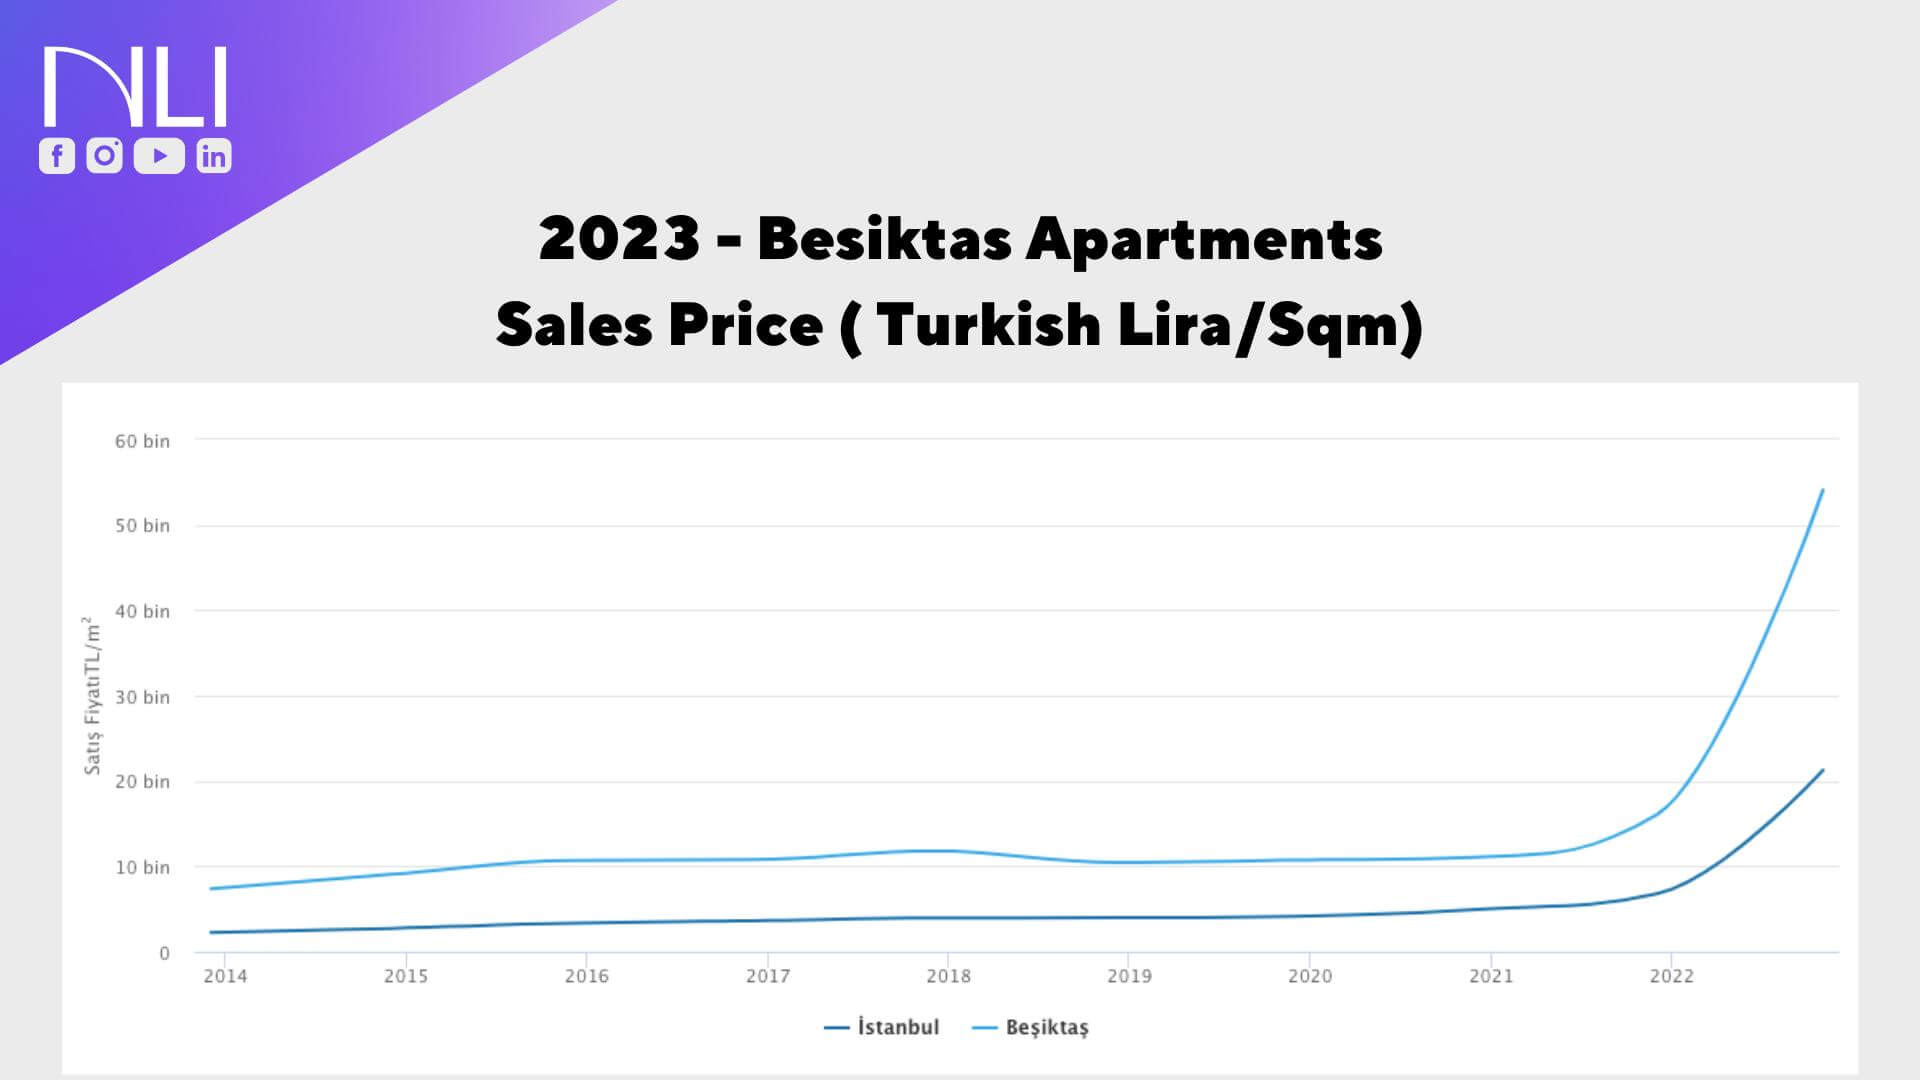 Besiktas Apartments Sales Prices